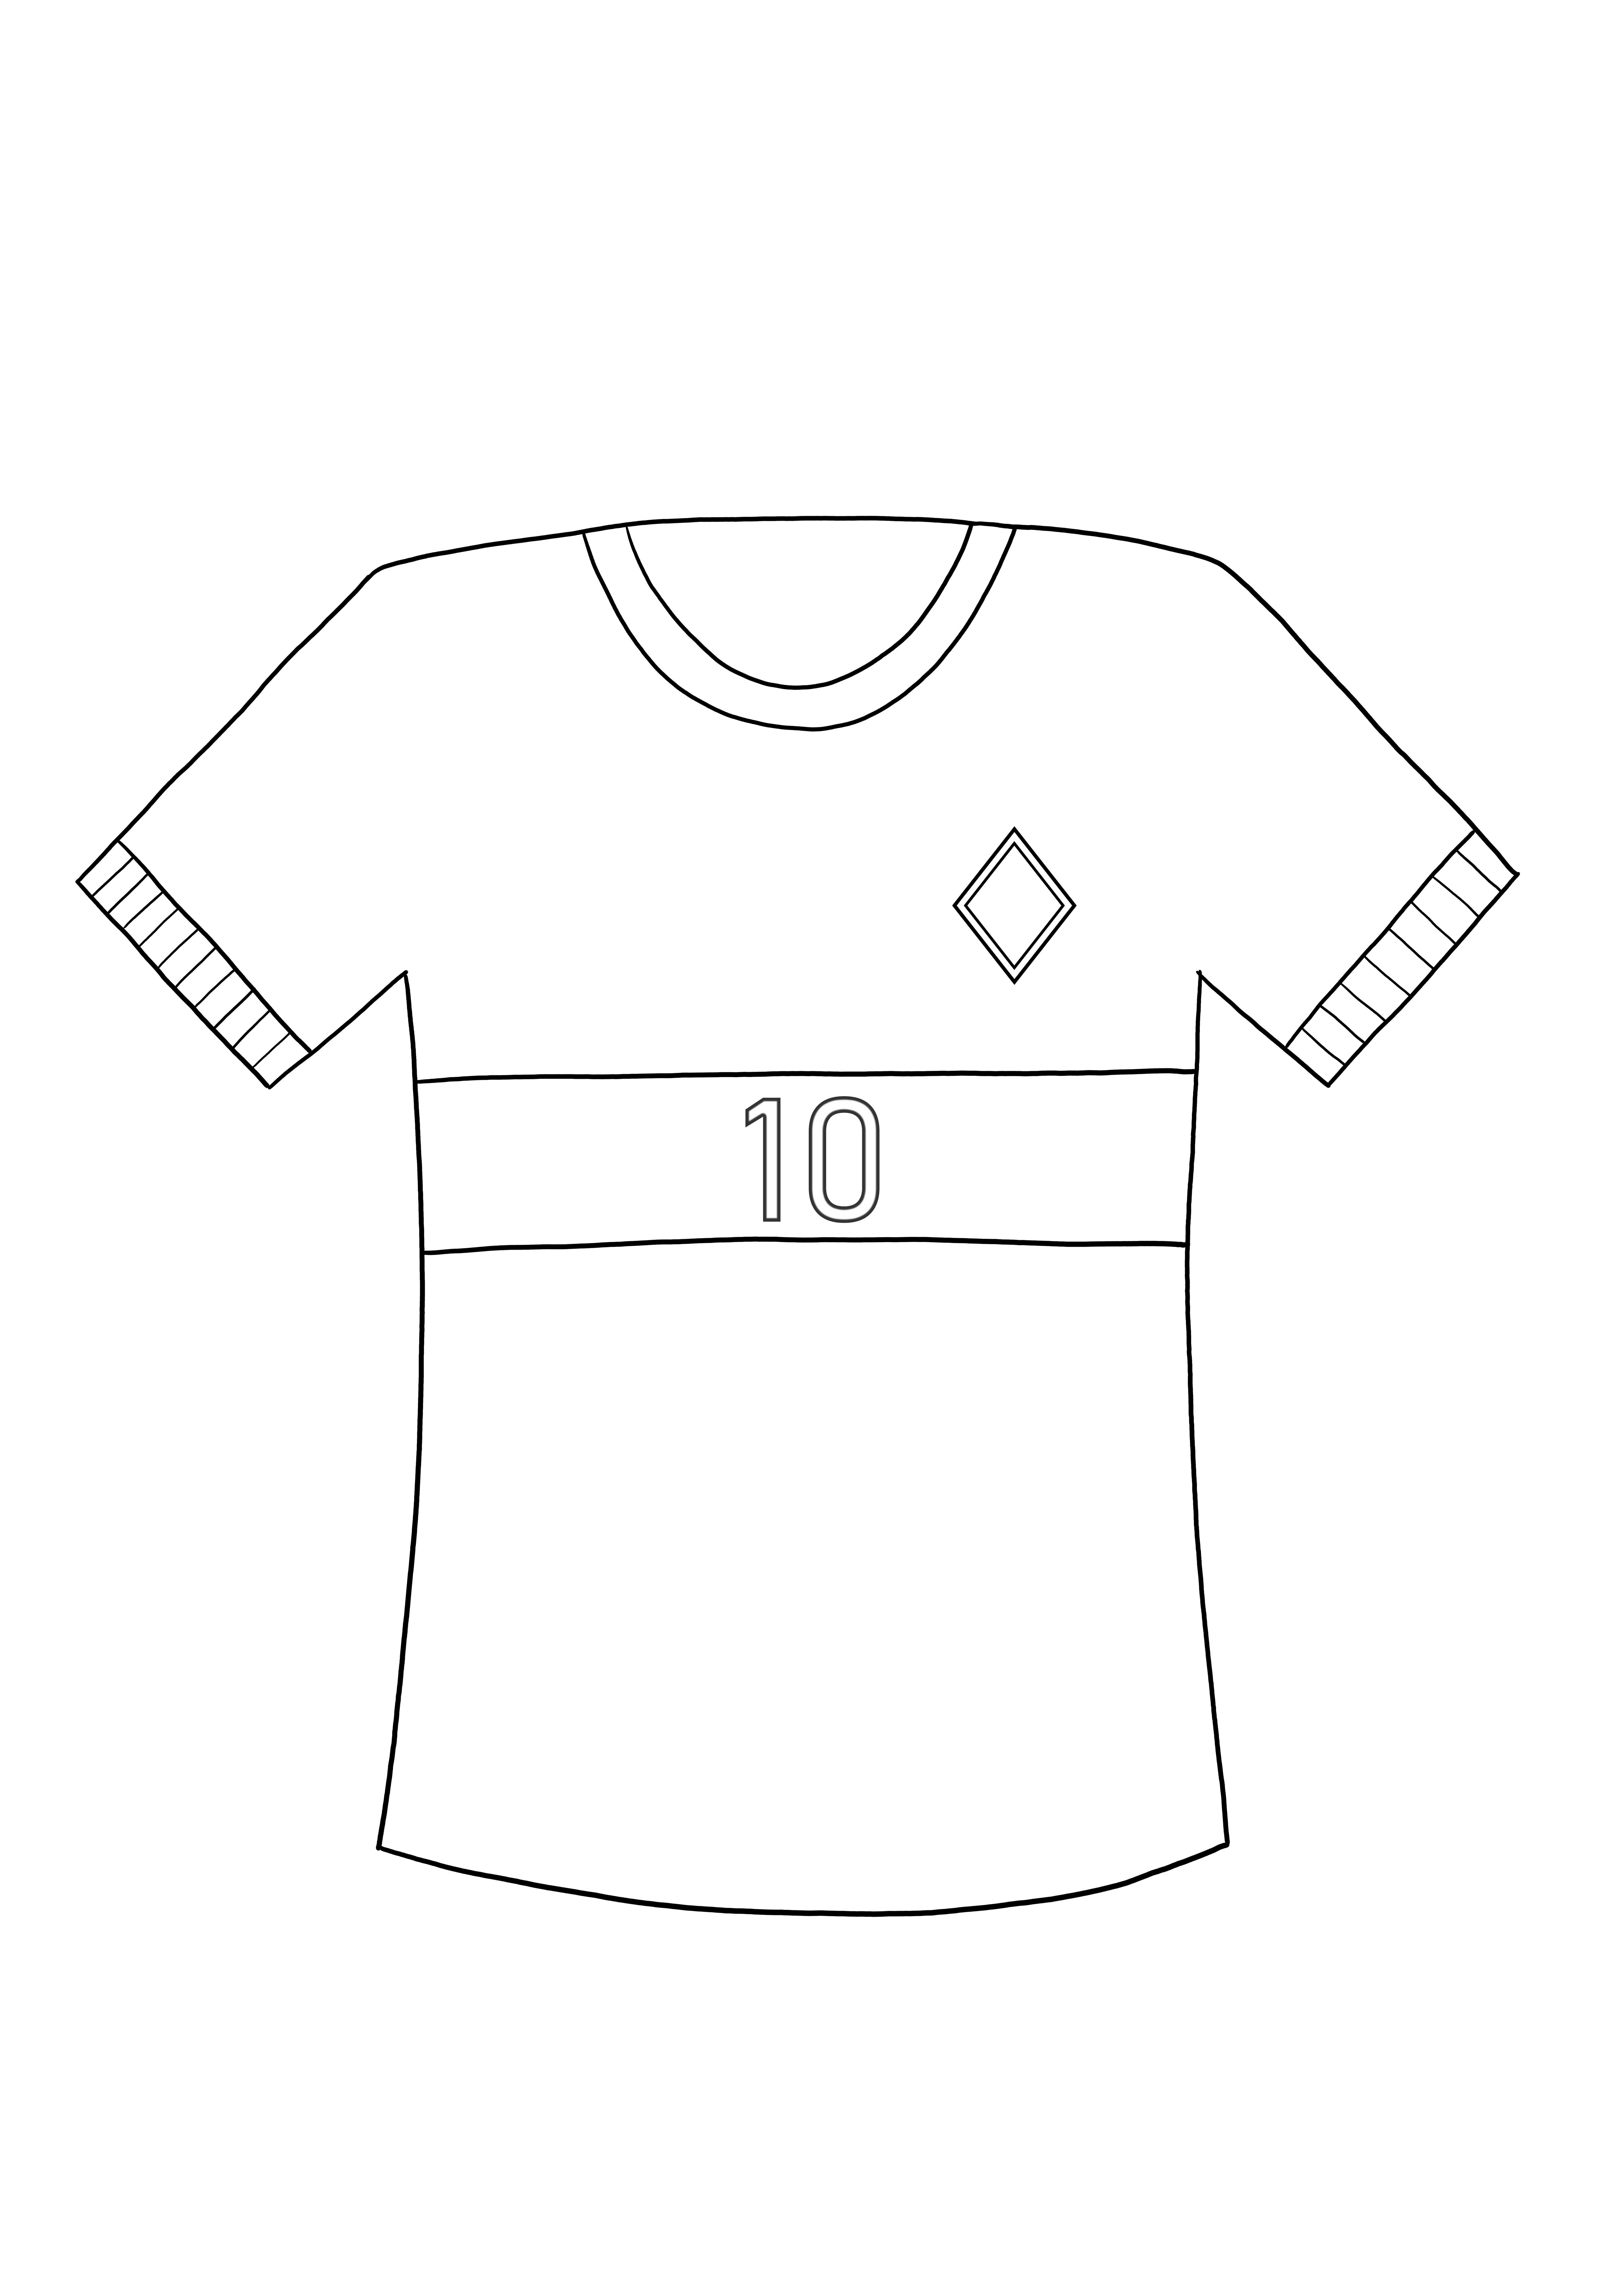 Camiseta de fútbol-hoja para colorear educativa para imprimir gratis